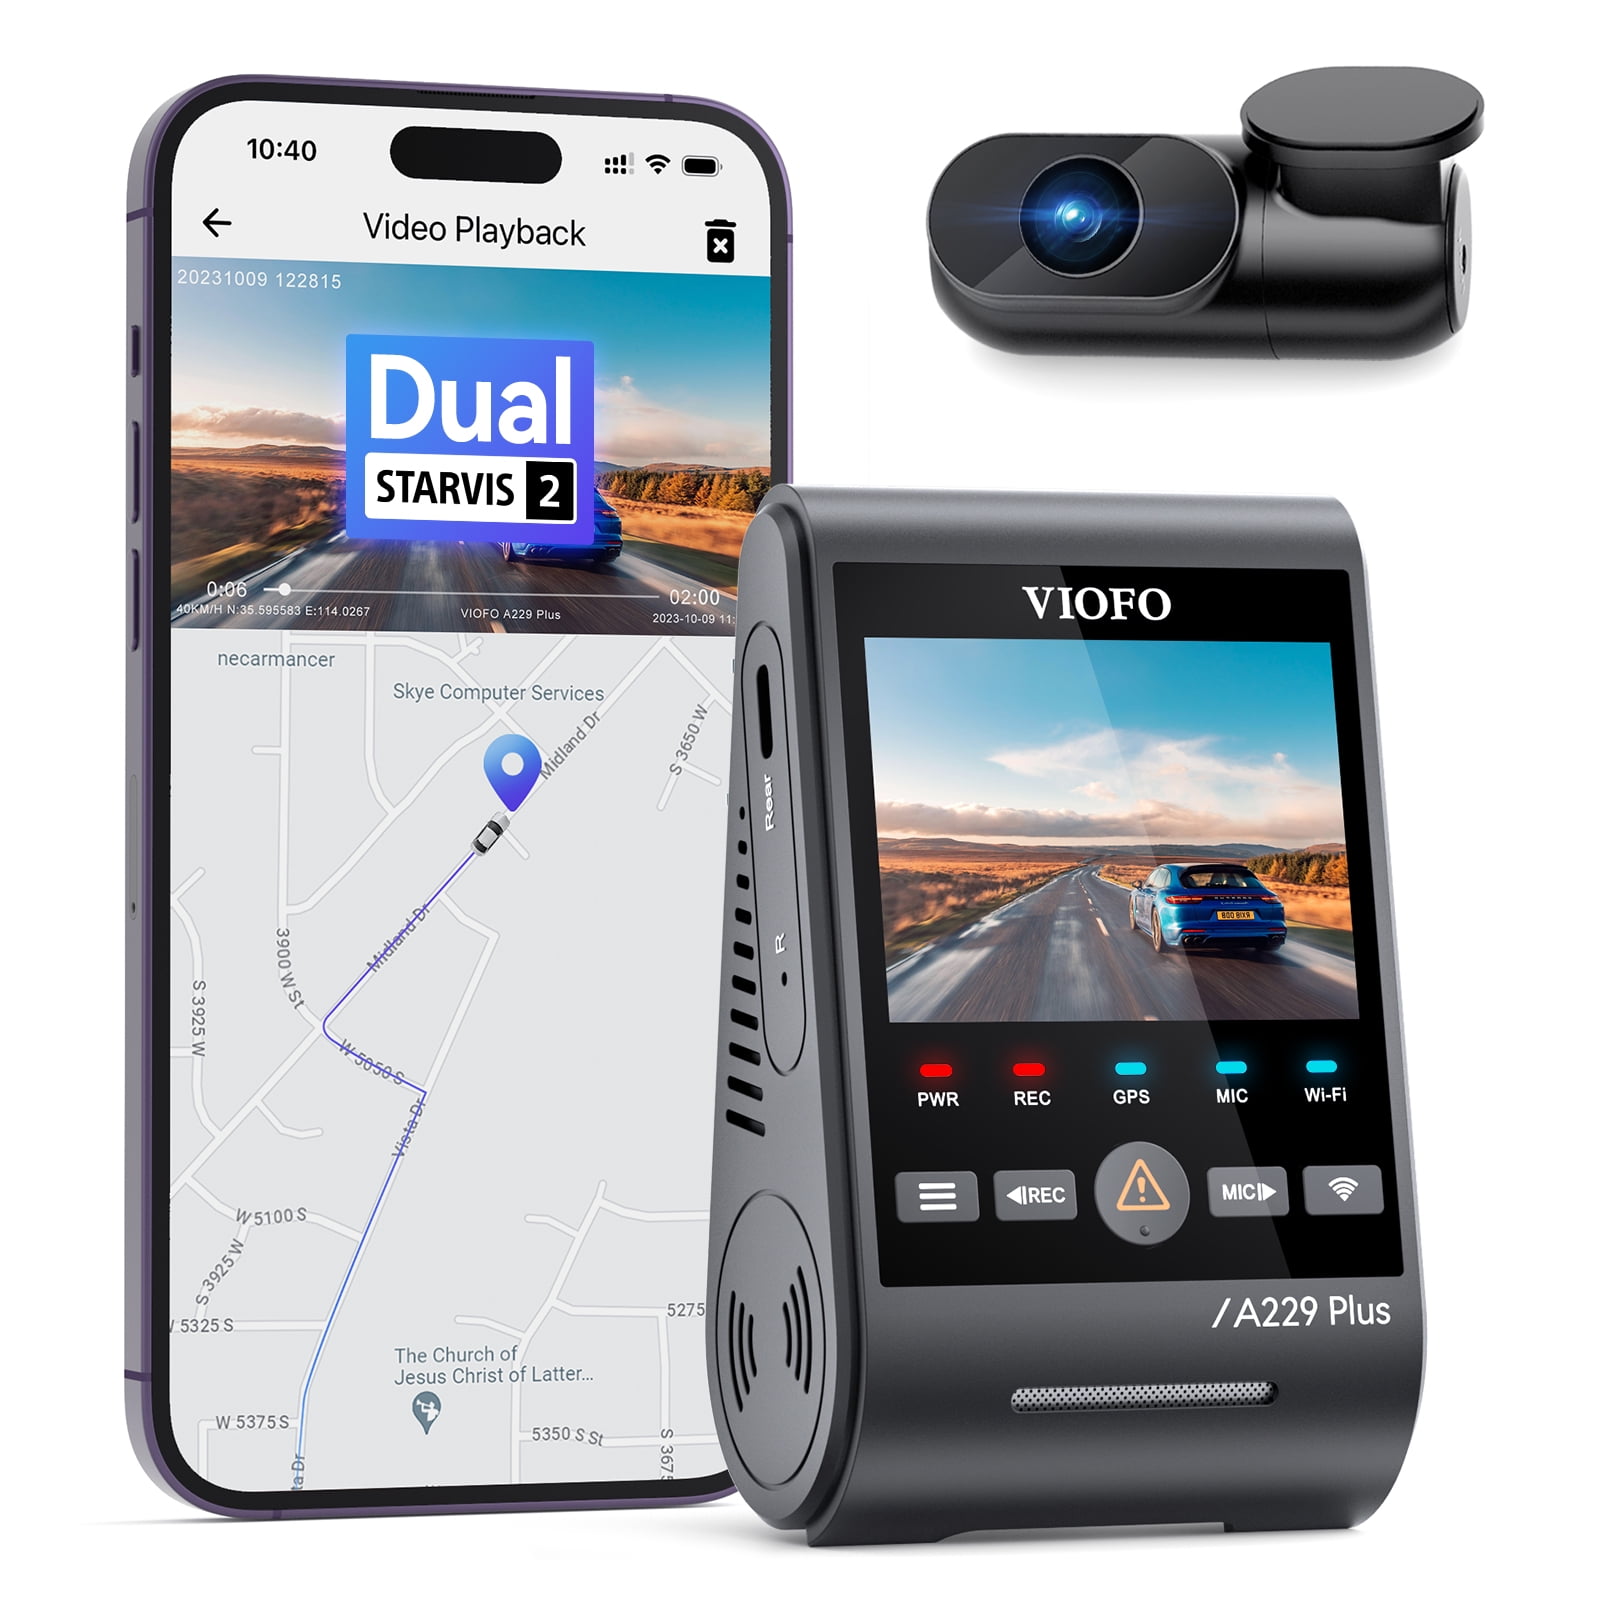 Vantrue X4S 4K 5G WiFi Dash Cam, 4K Front Wireless Dash Camera, 24/7 P